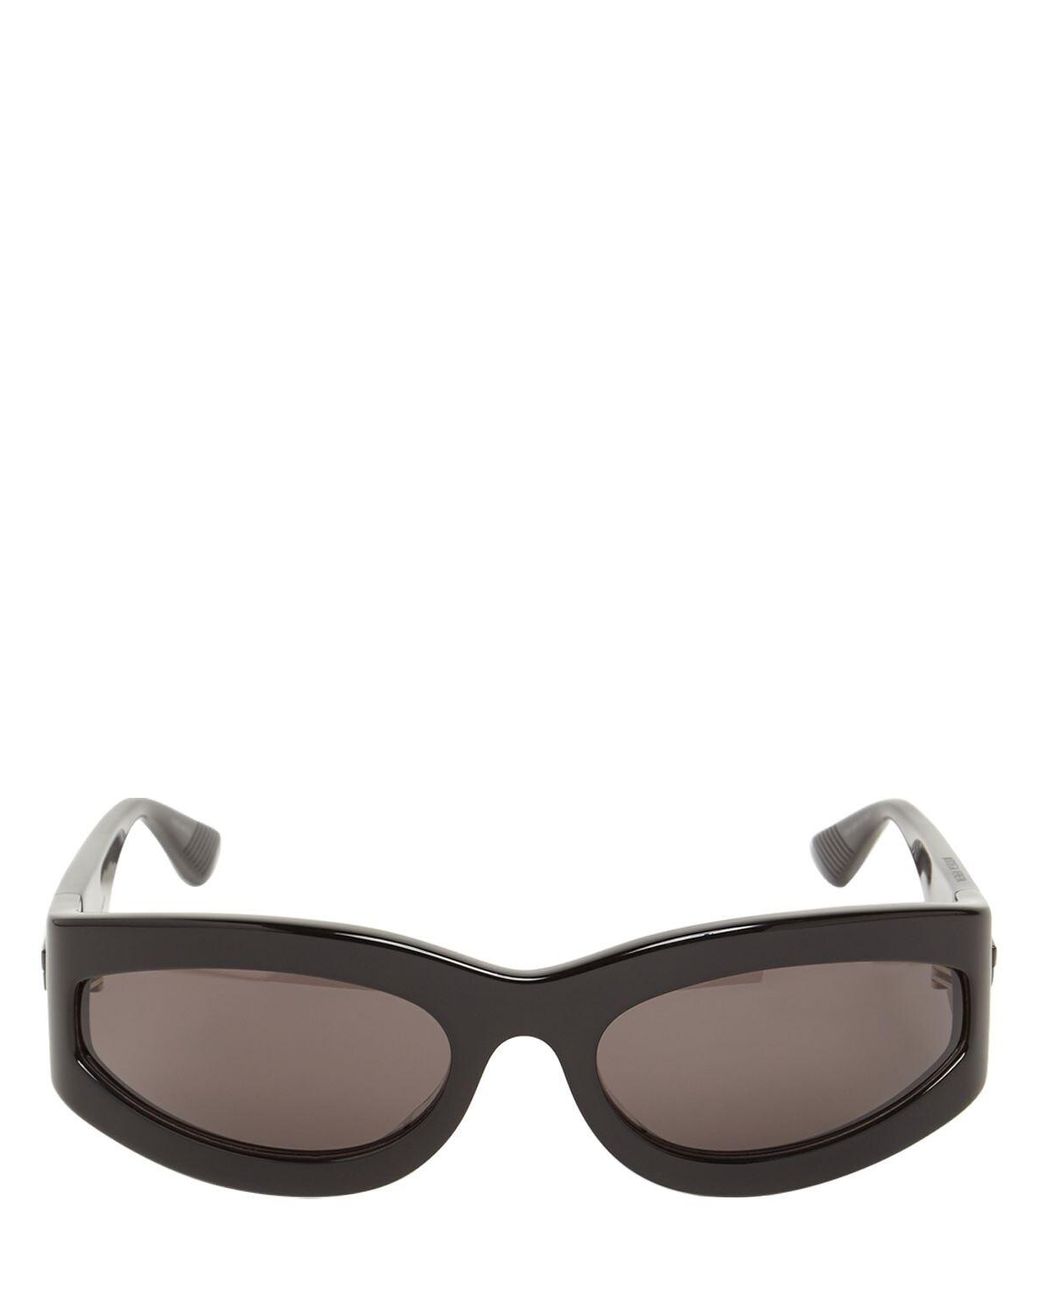 Bottega Veneta Bv1089s Oval Acetate Sunglasses in Black | Lyst